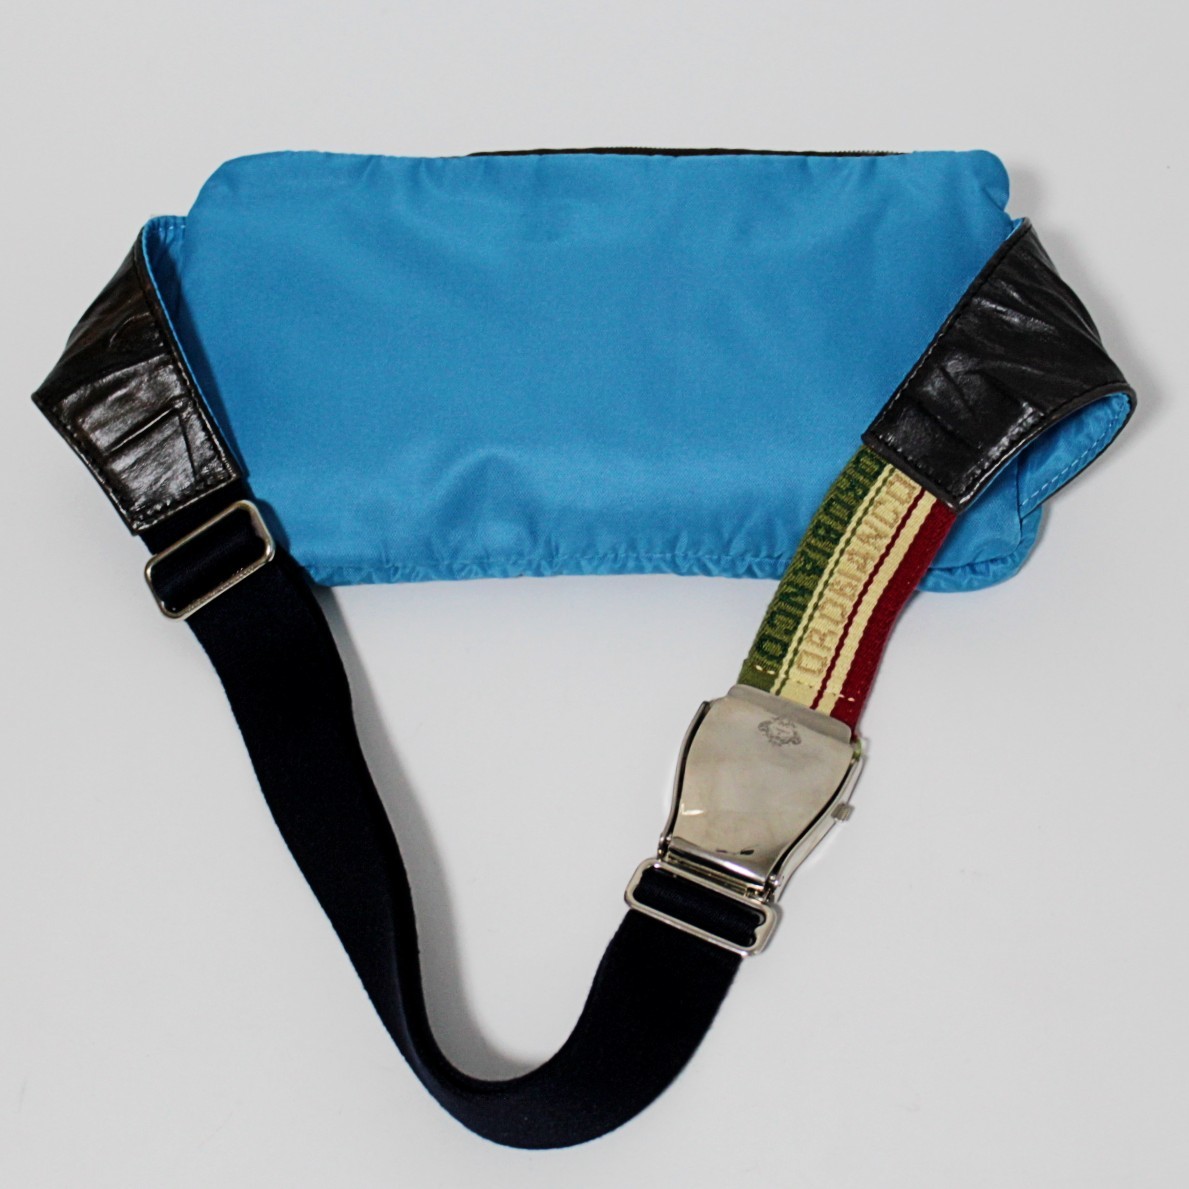  новый товар Orobianco Италия производства Logo plate сумка "body" one сумка на плечо синий серия K2226